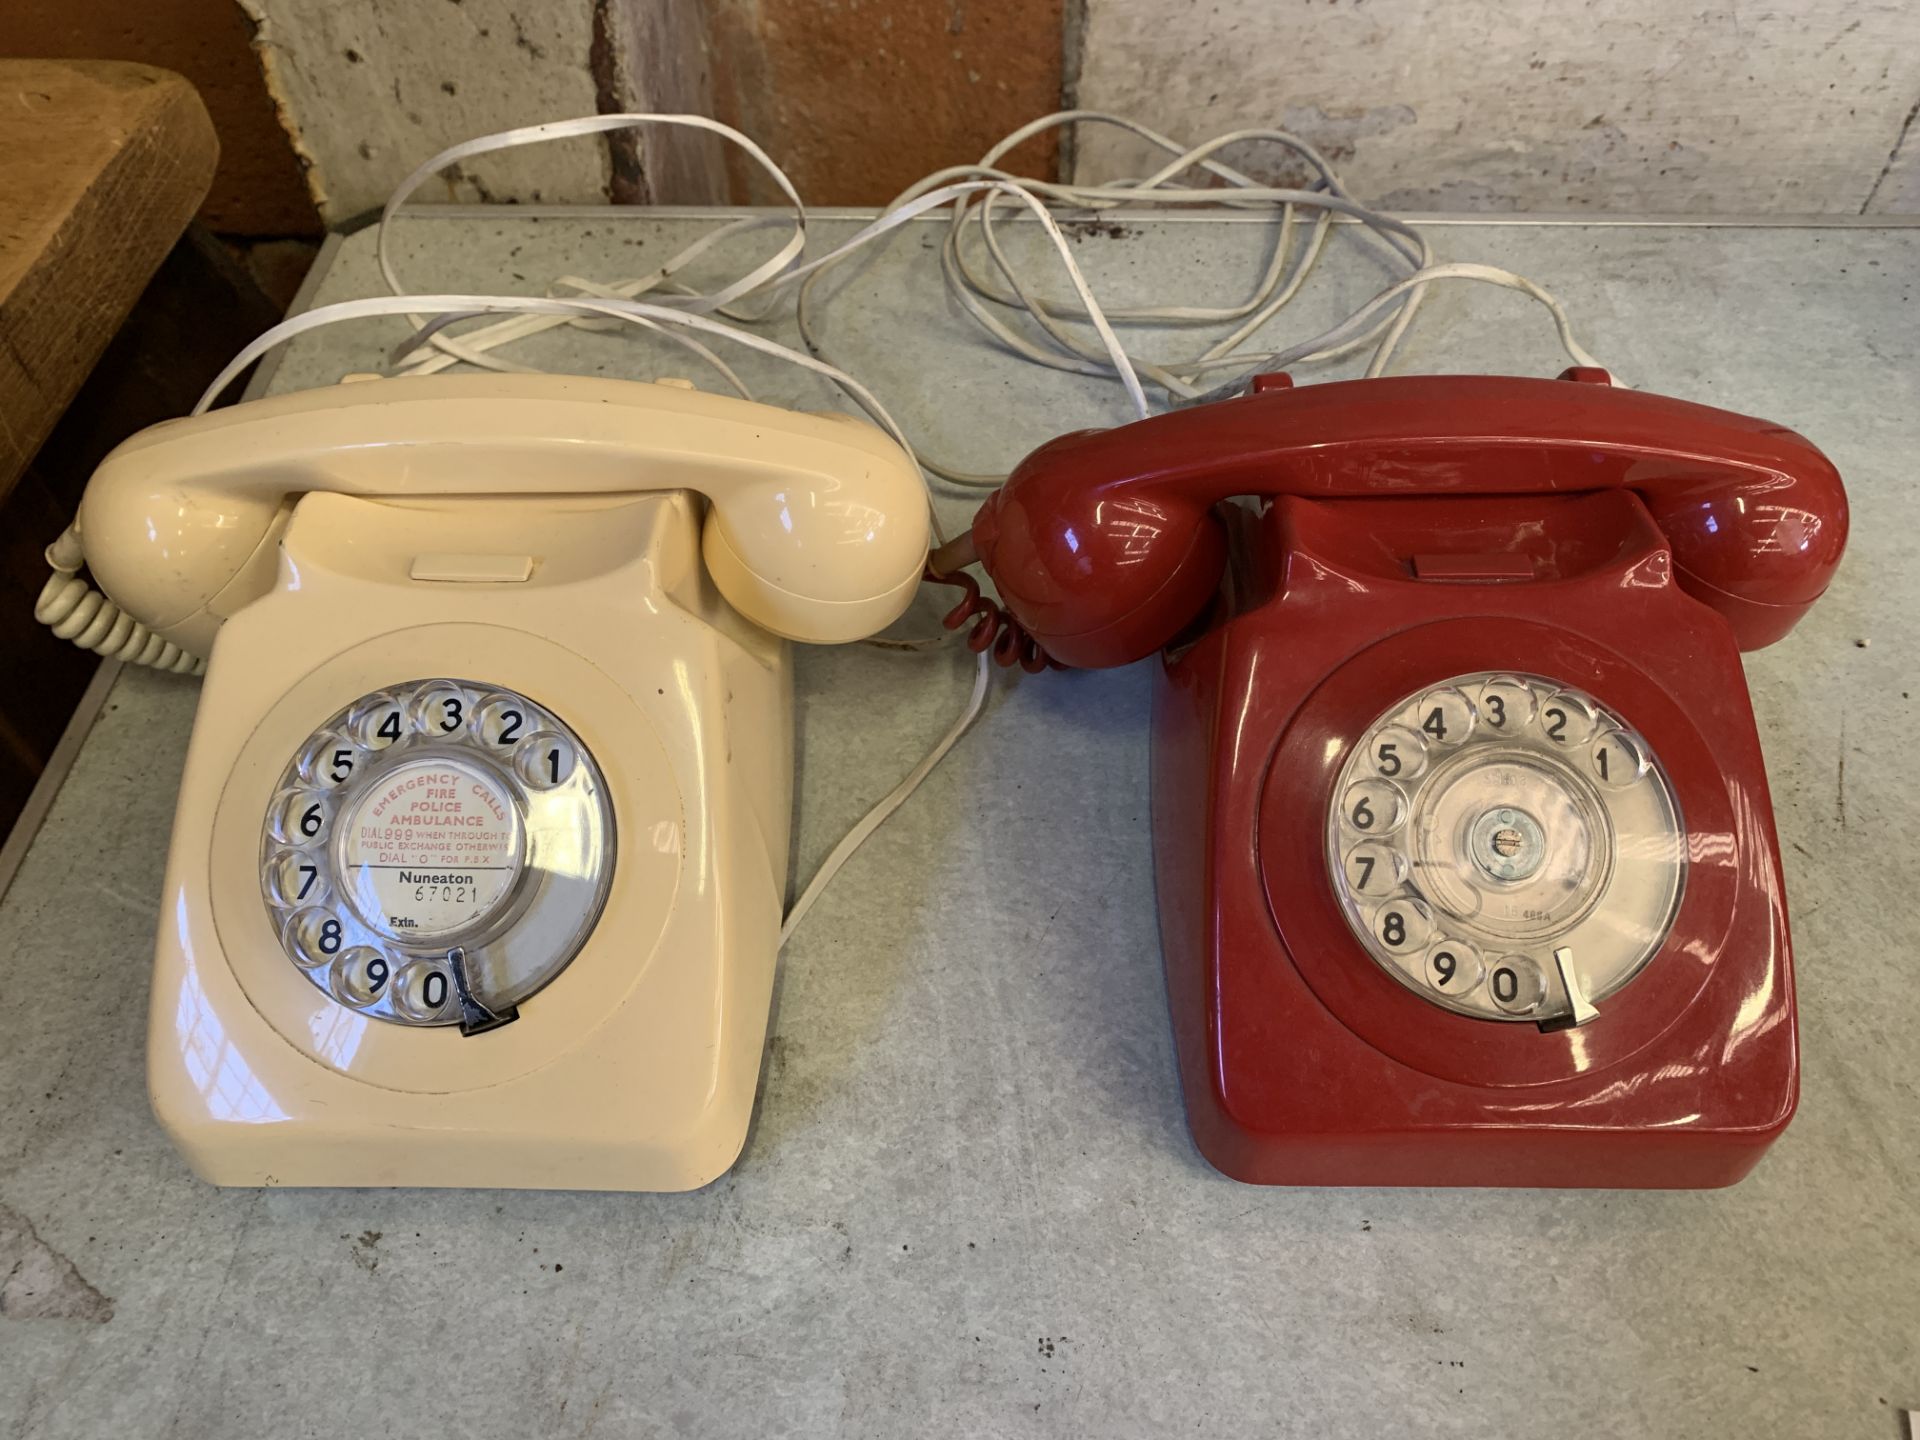 Tele 8746F red plastic telephone and a cream plastic one